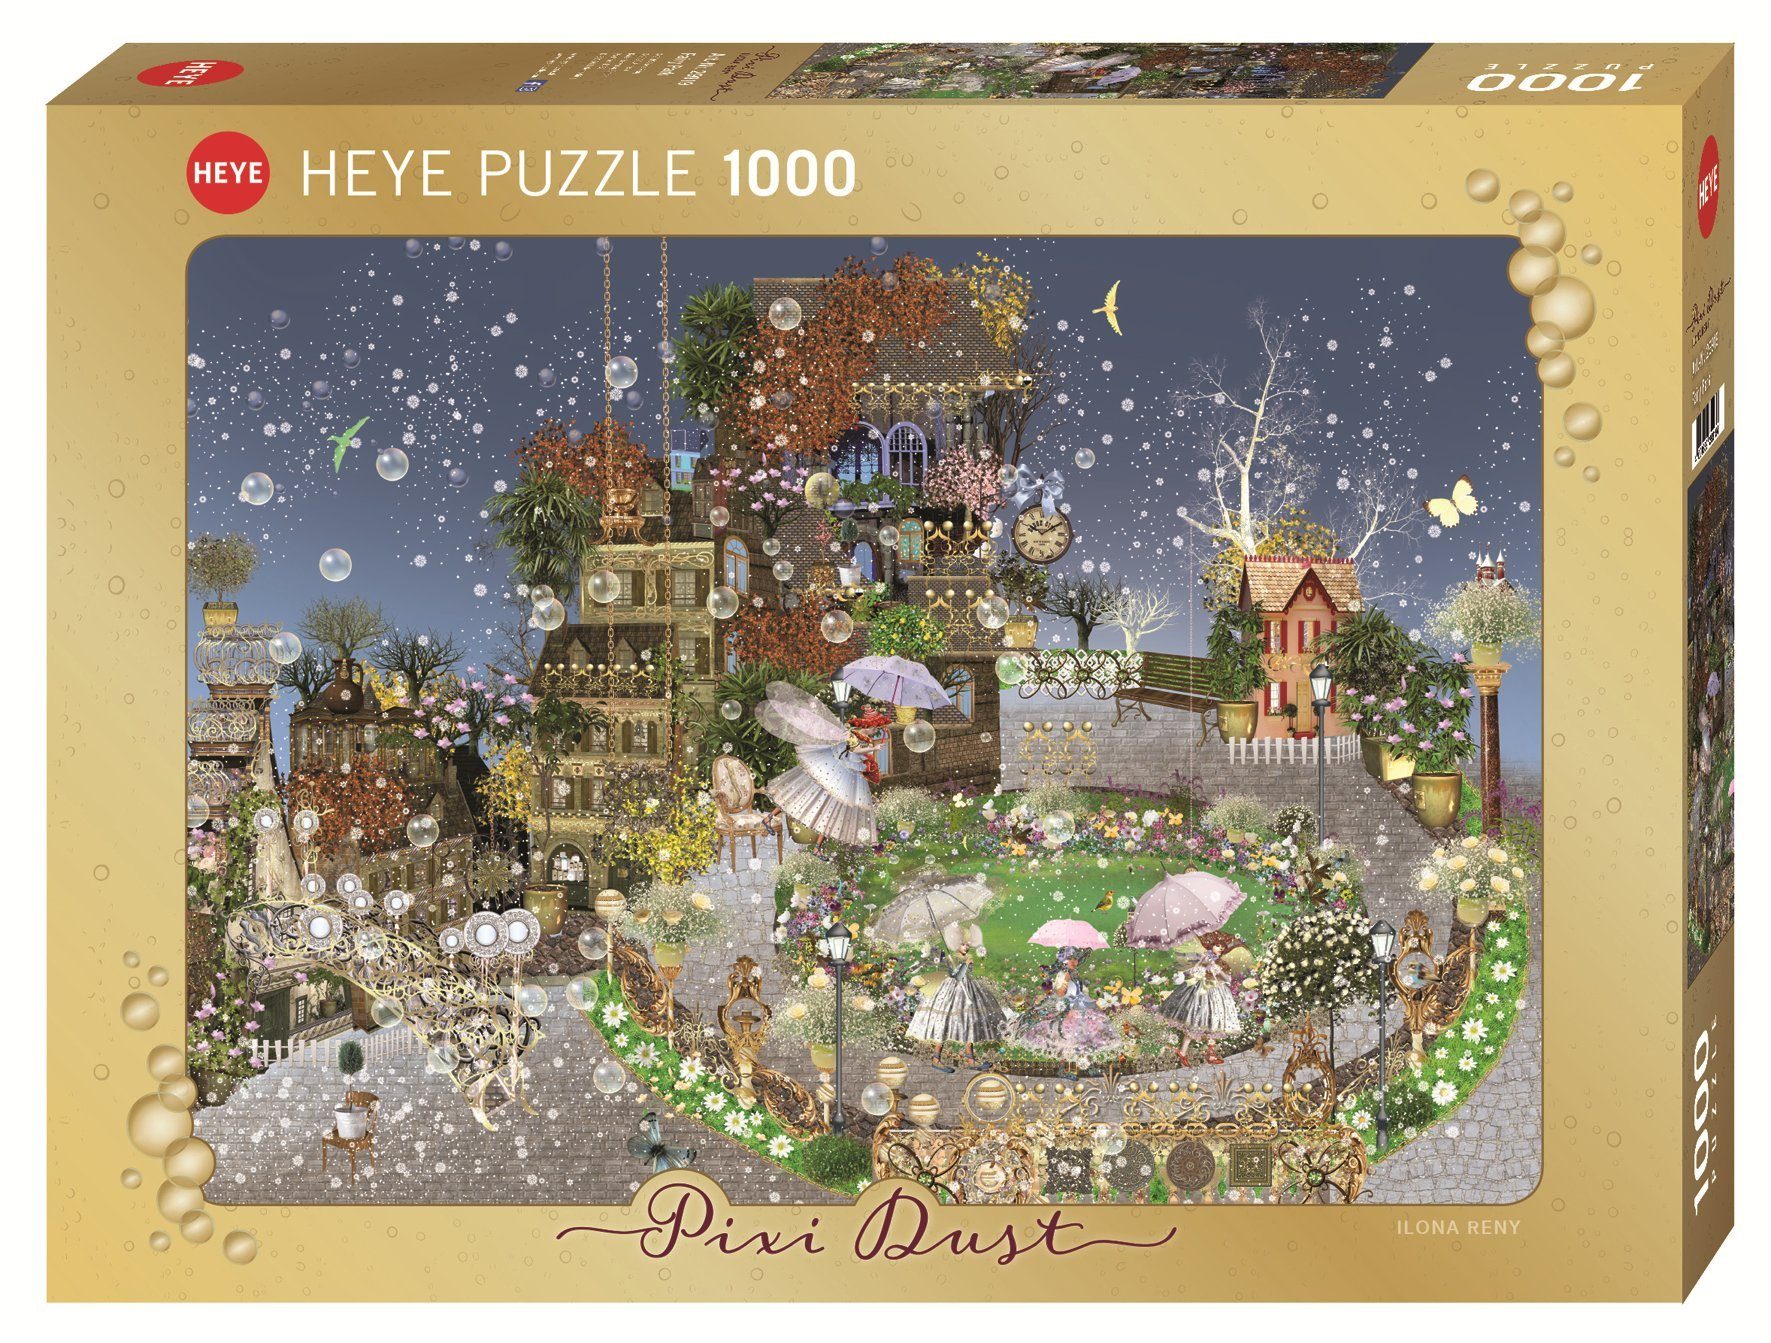 29919 Puzzleteile, Made 1000 1000 HEYE in Puzzle Reny Fairy Park Teile Ilona Europe Puzzle, HEYE